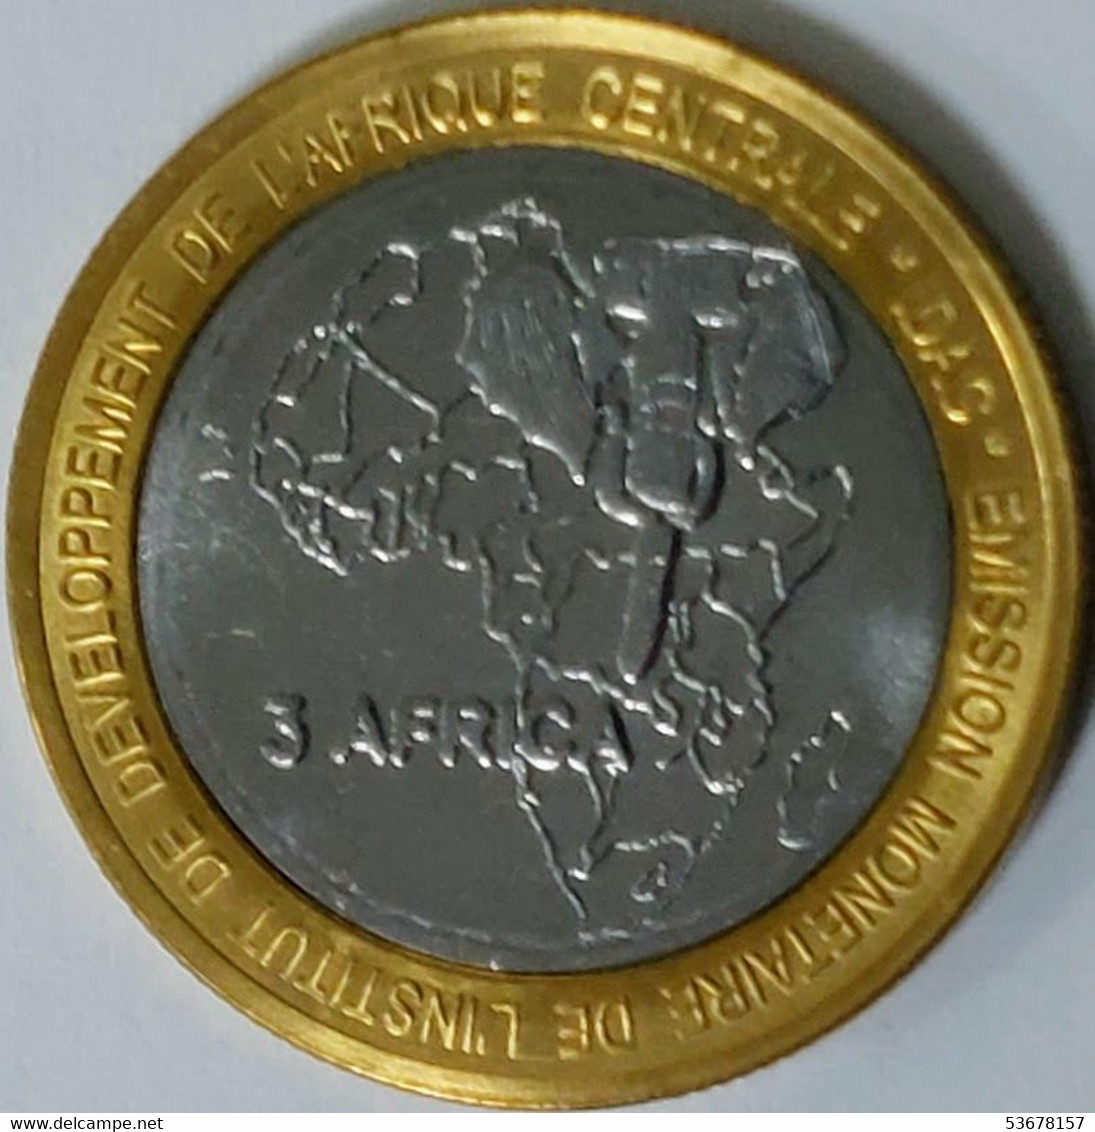 Cameroon - 4500 CFA Francs (3 Africa), 2005, X# 24, Pope Benedict XVI (Fantasy Coin) (1235) - Cameroun